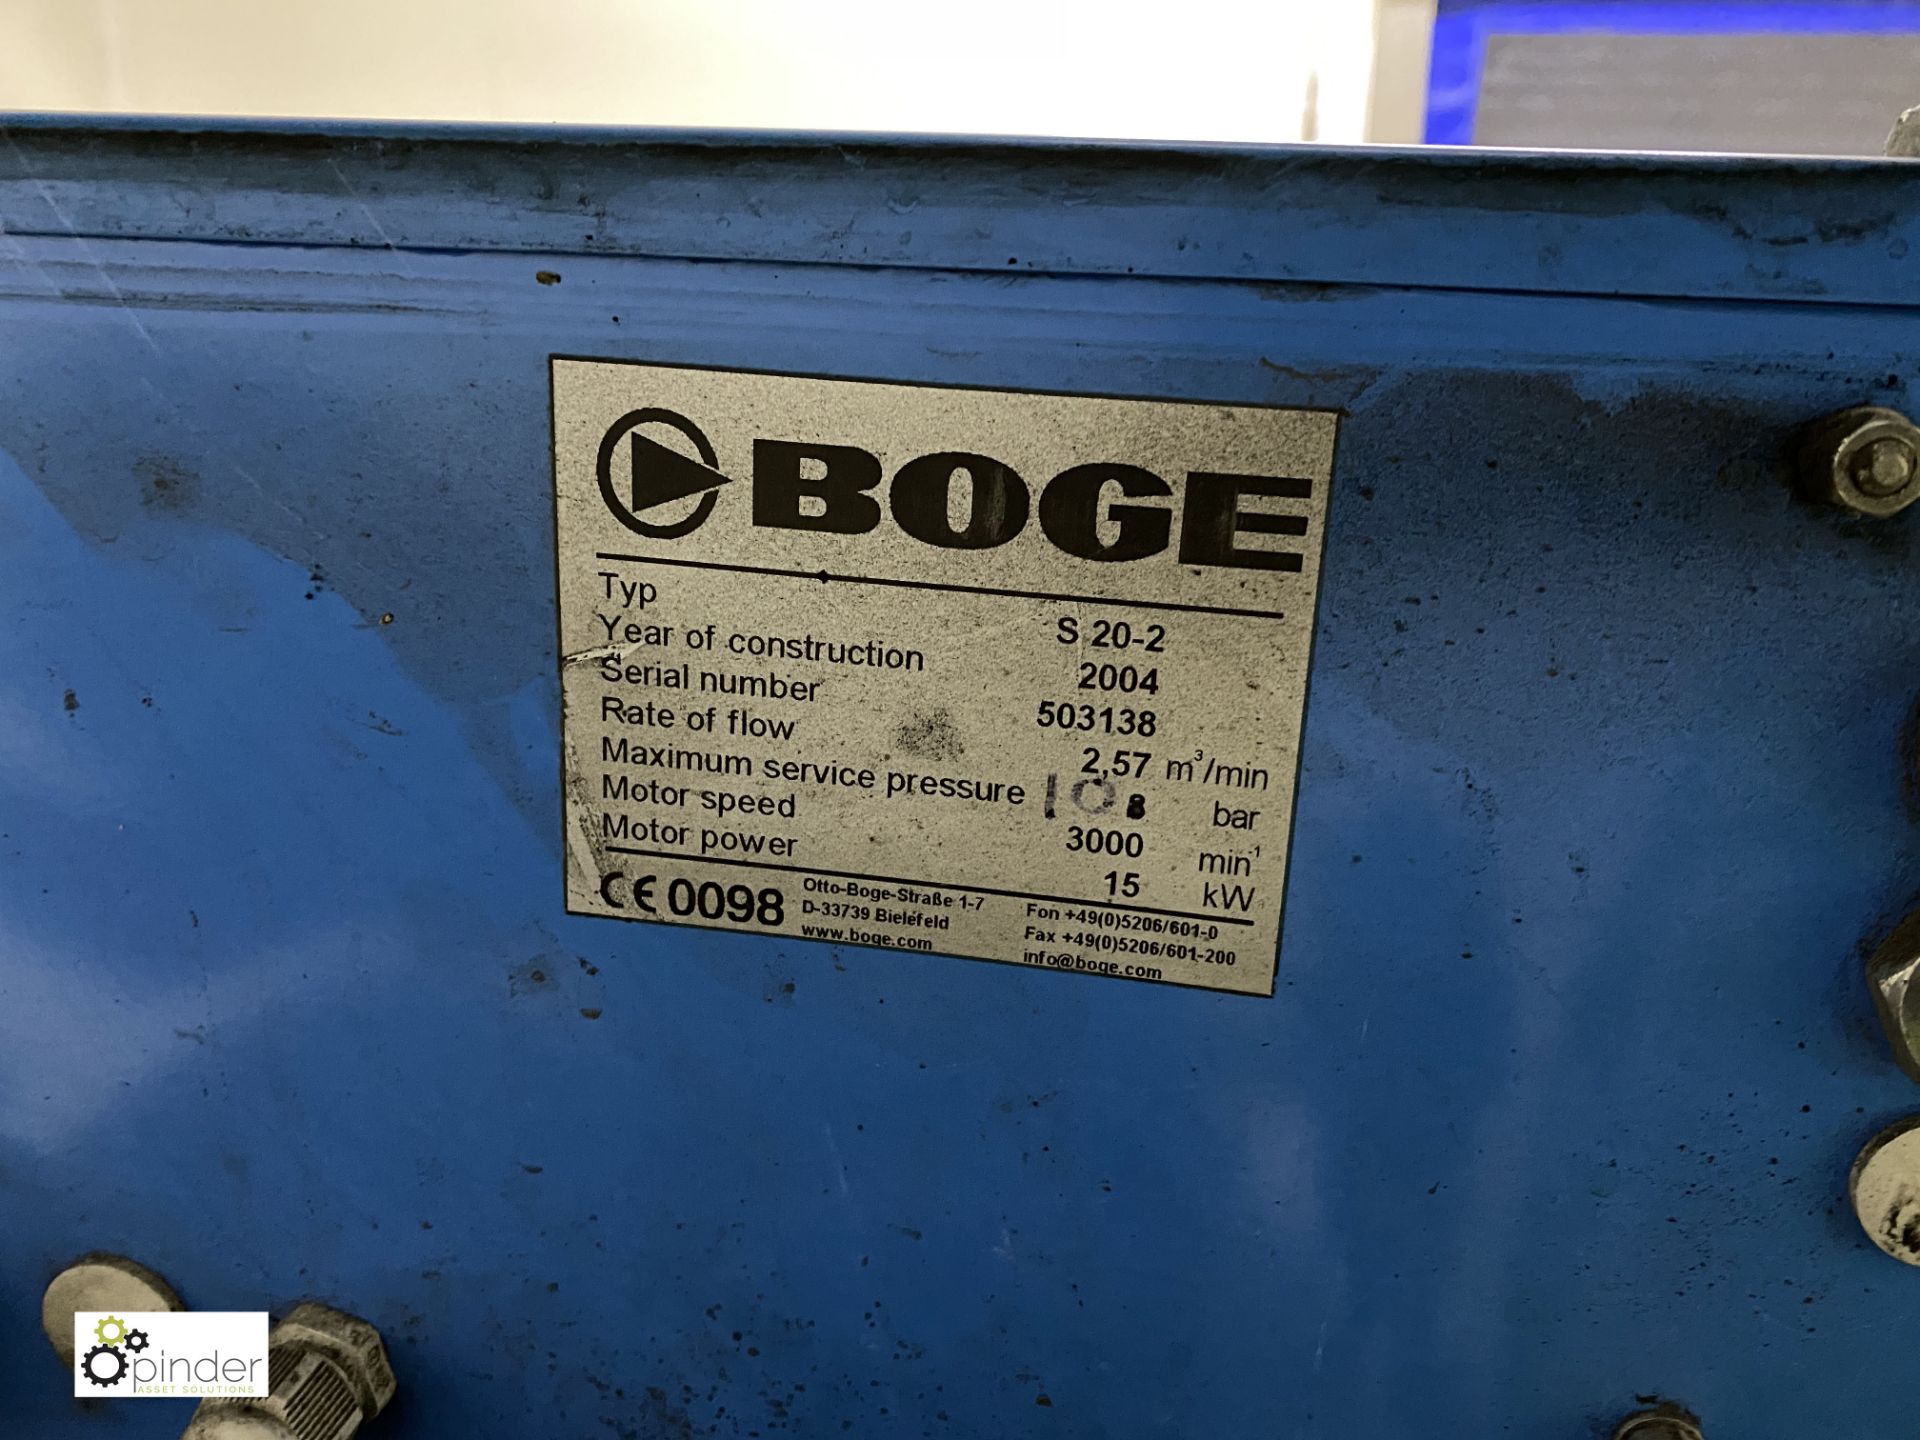 Boge S20-2 Packaged Air Compressor, swp 10bar, 15kw motor, year 2004, serial number 503138, - Image 5 of 7